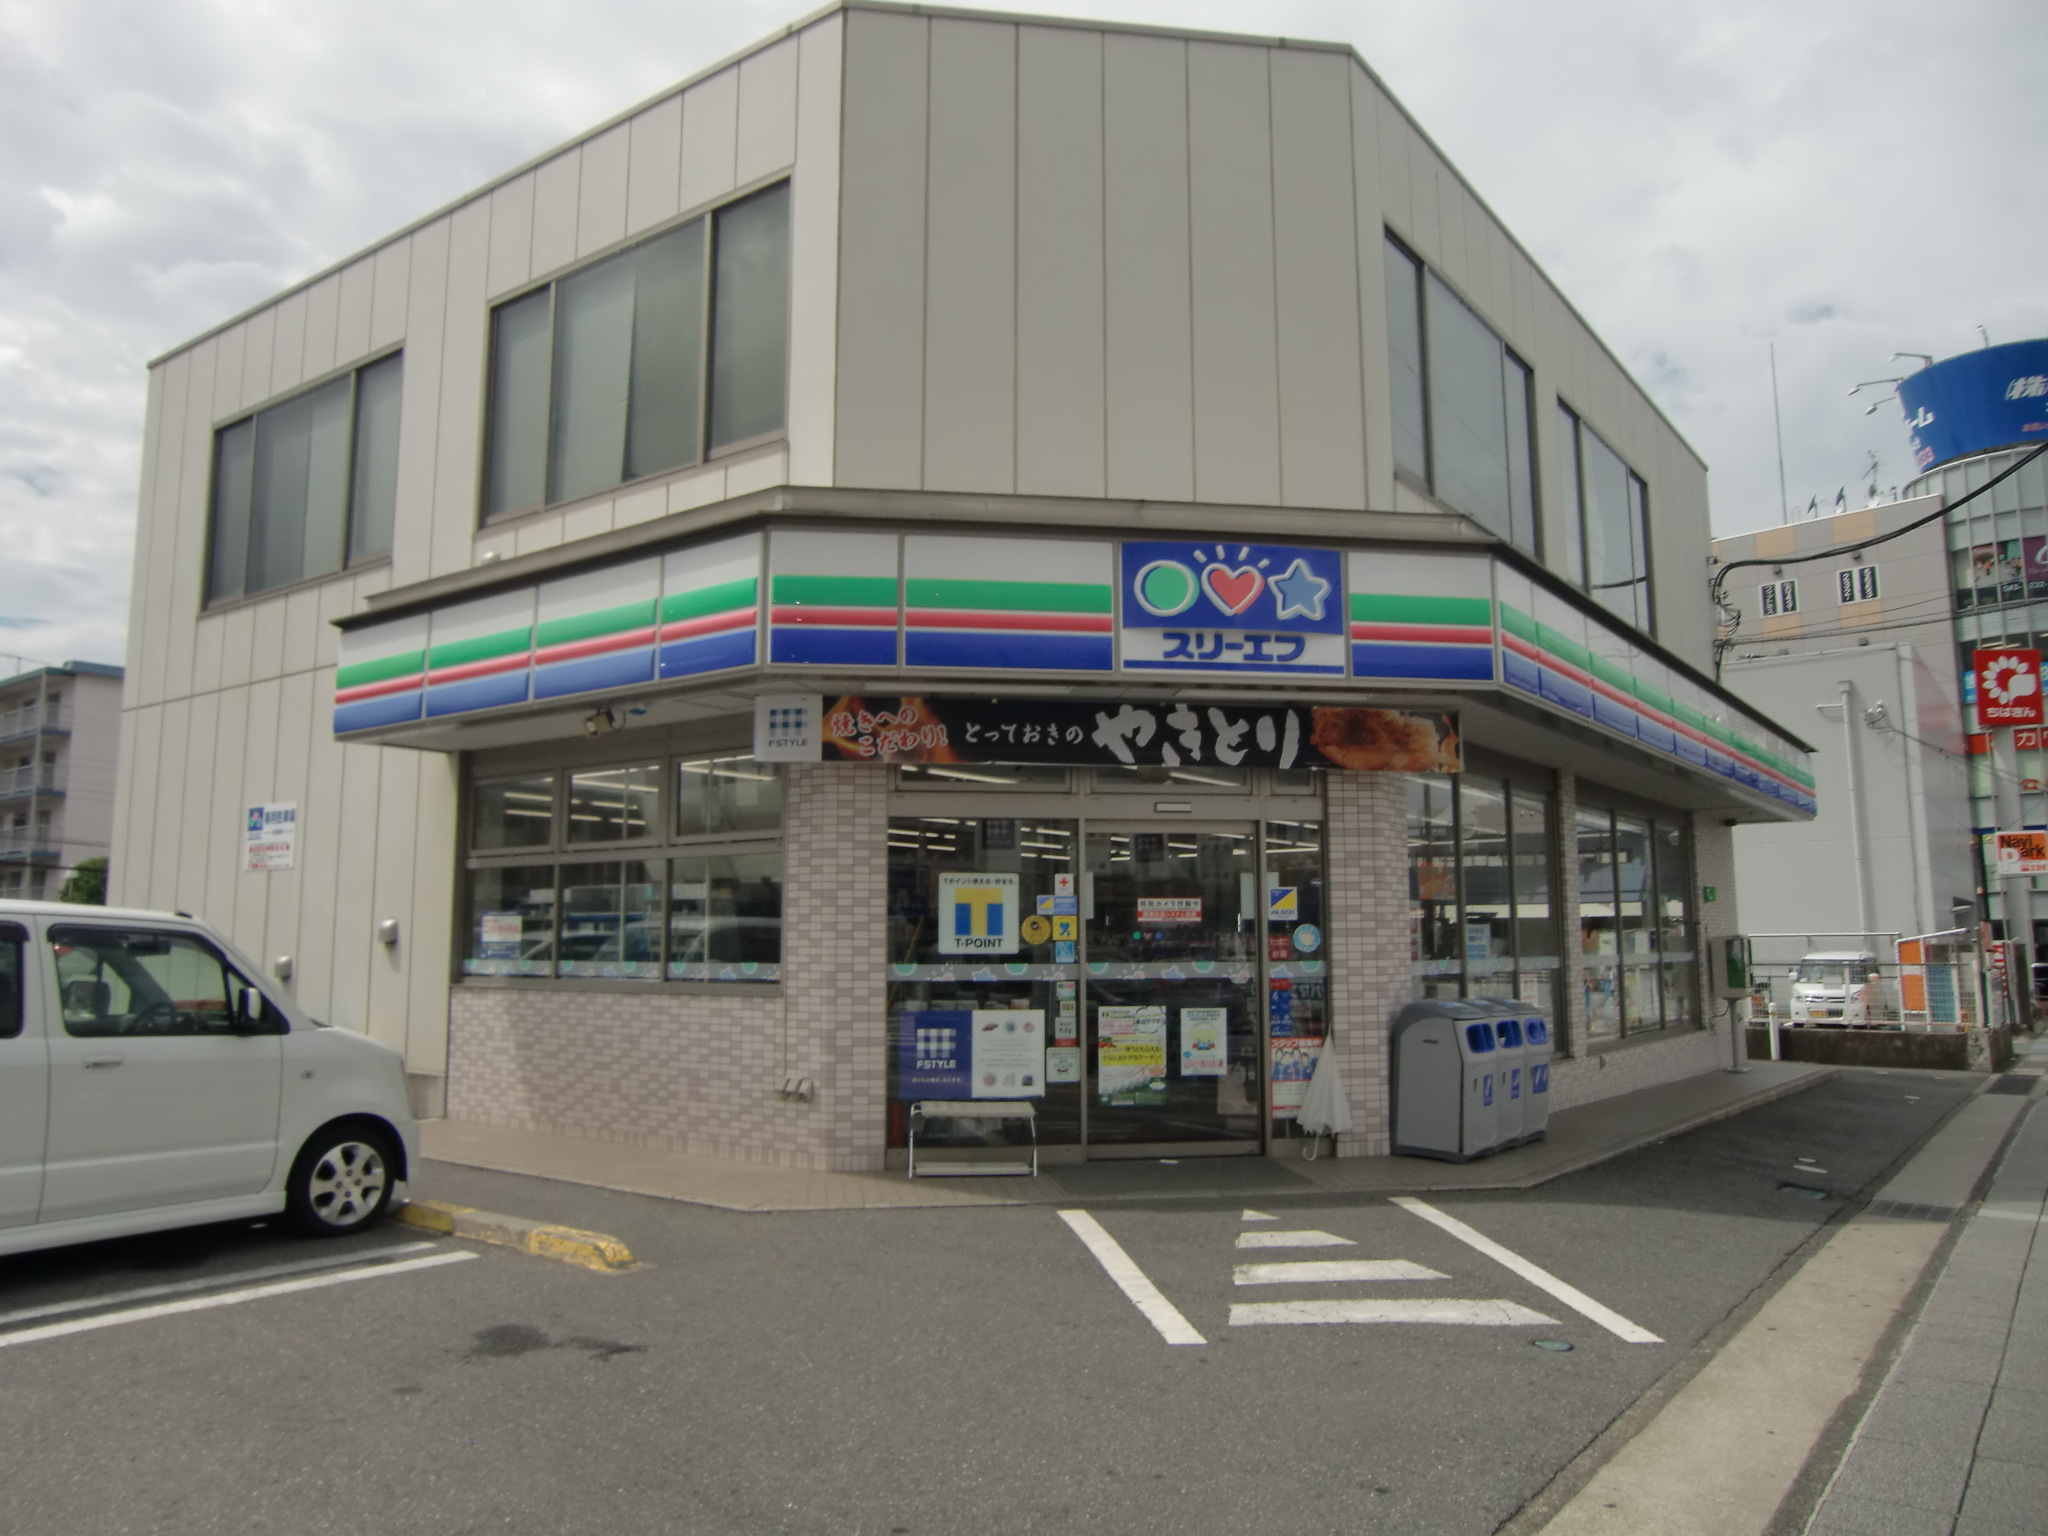 Convenience store. Three F Tsuga Station store up (convenience store) 593m